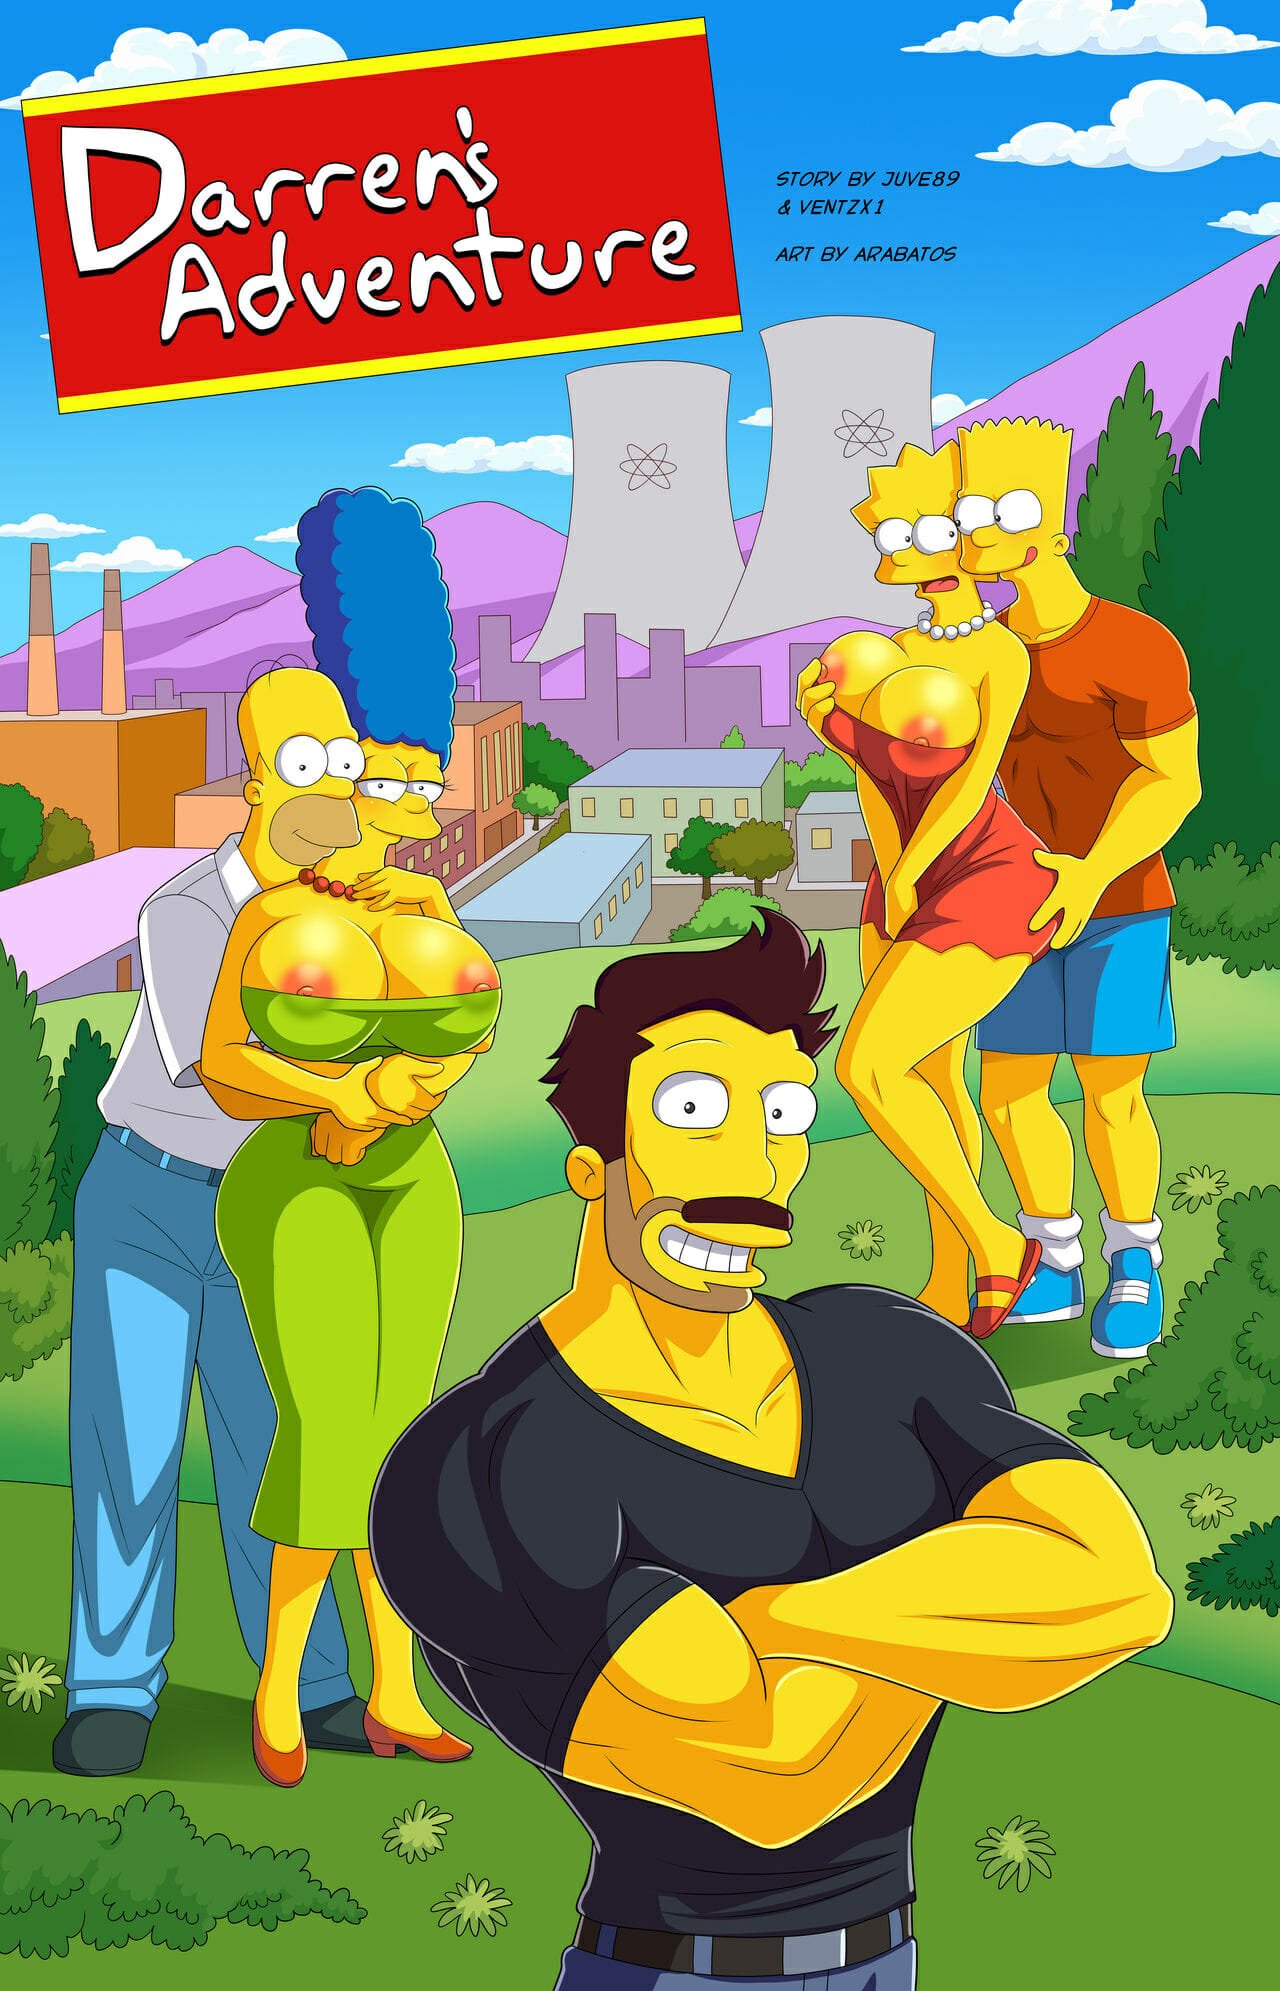 Simpsons Gender Bender Hentai - Darren's Adventure Porn Comics by [Arabatos] (The Simpsons) Rule 34 Comics  â€“ R34Porn